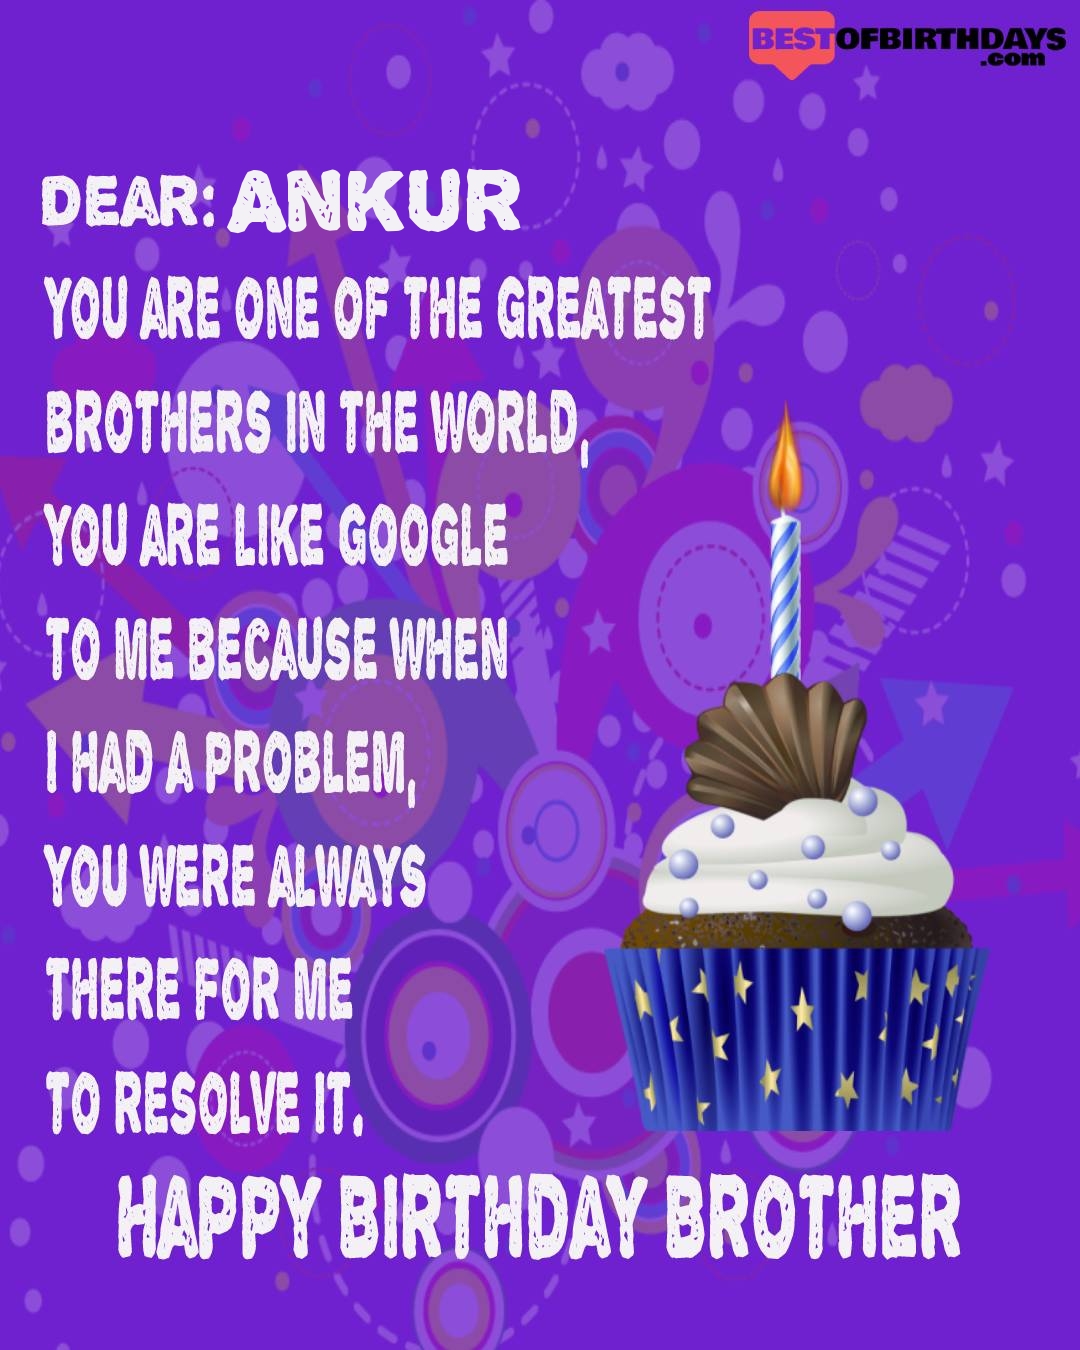 Happy birthday ankur bhai brother bro